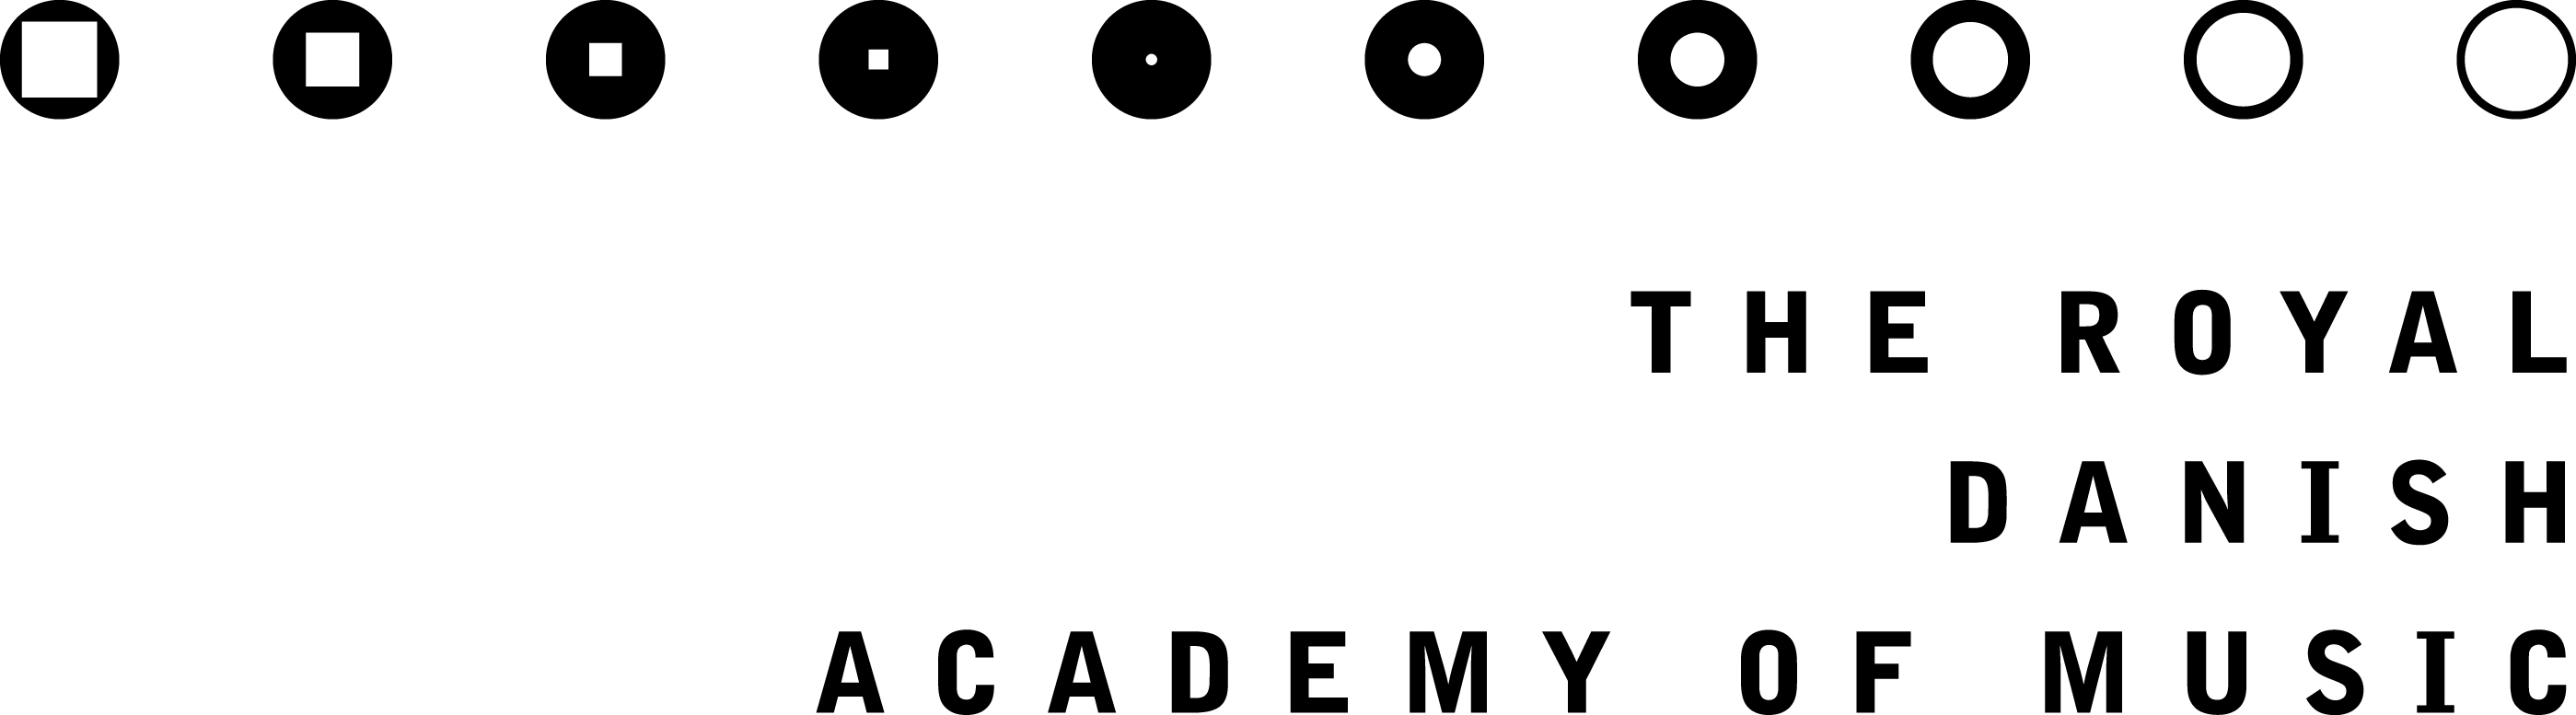 The Royal Danish Academy of Music